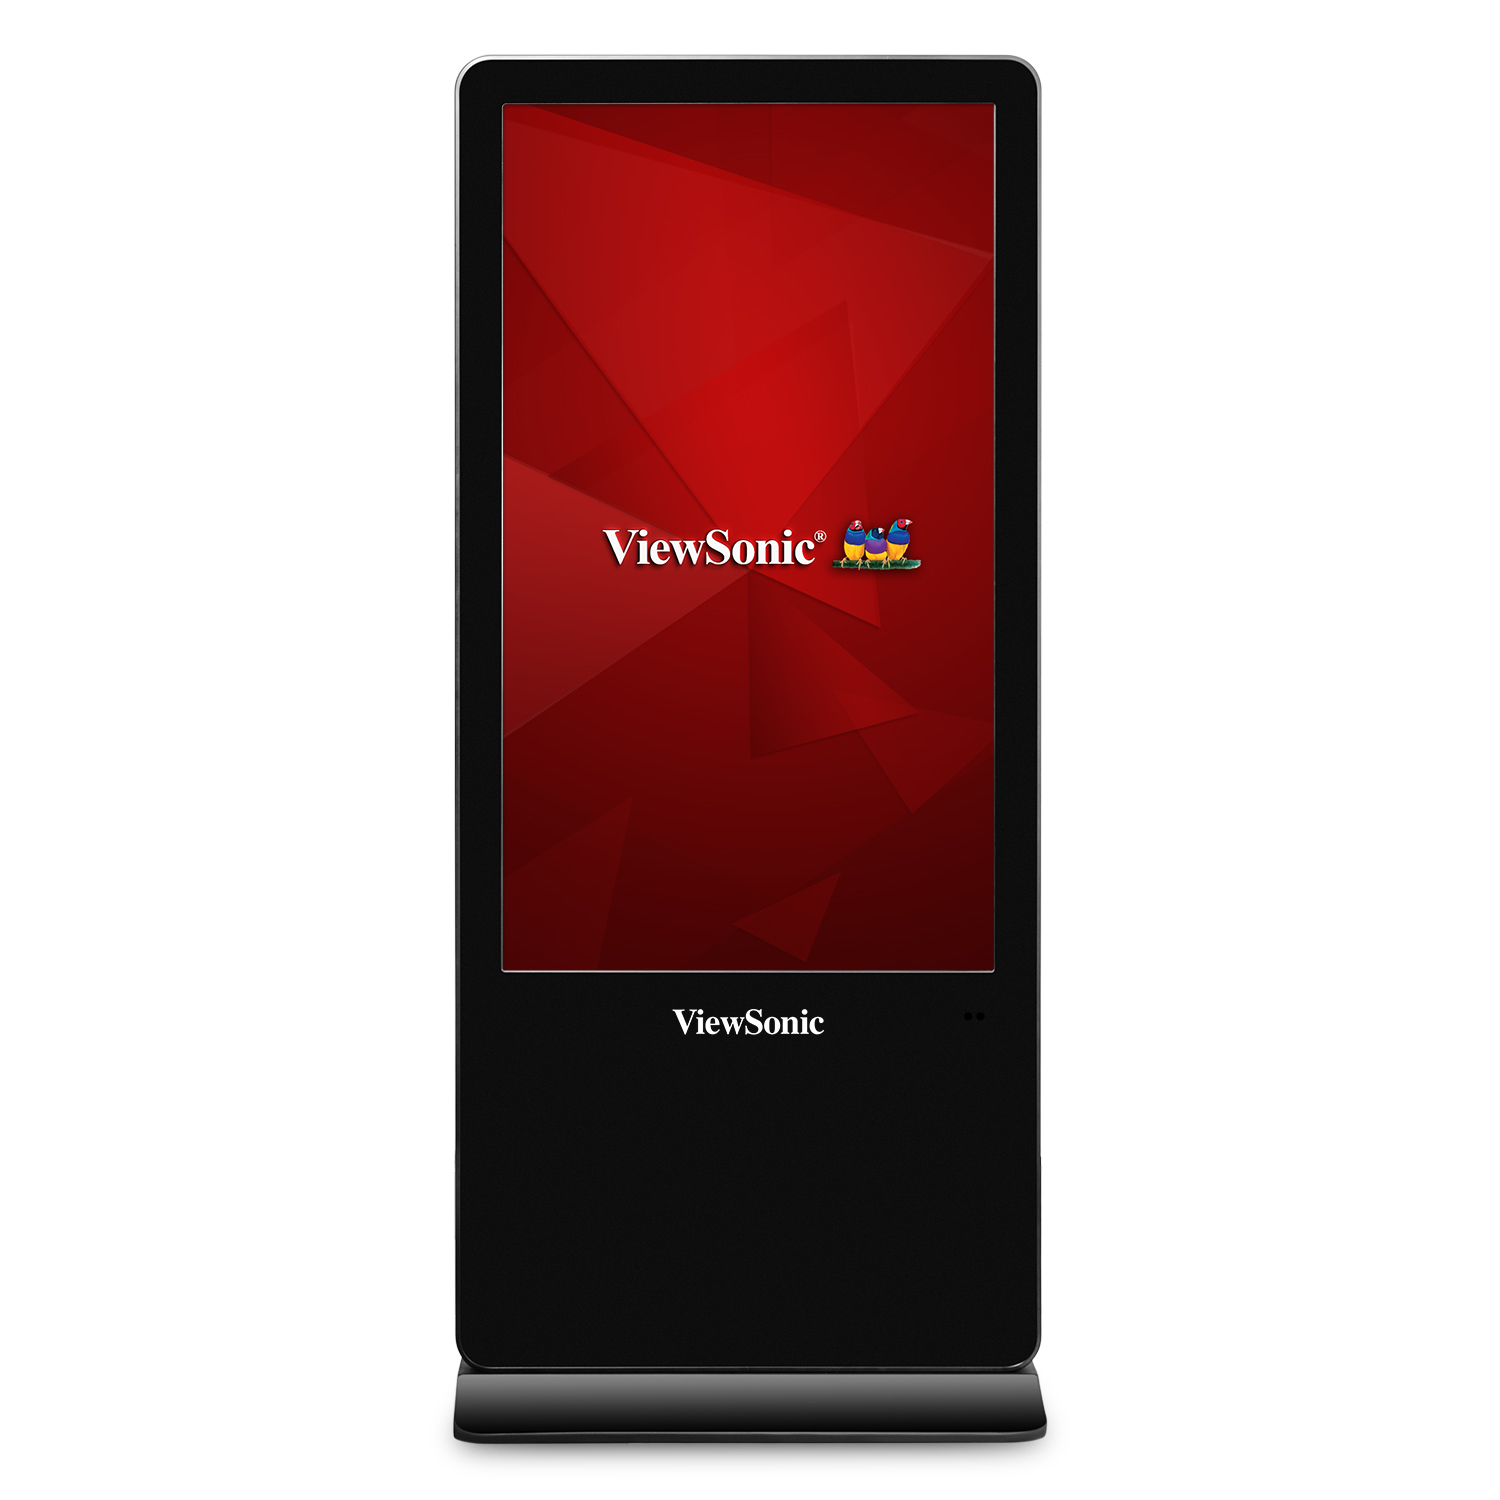 ViewSonic EP5520 - ePoster Series - Kiosk - 16 GB - Monitor: LED 139.7 cm (55")